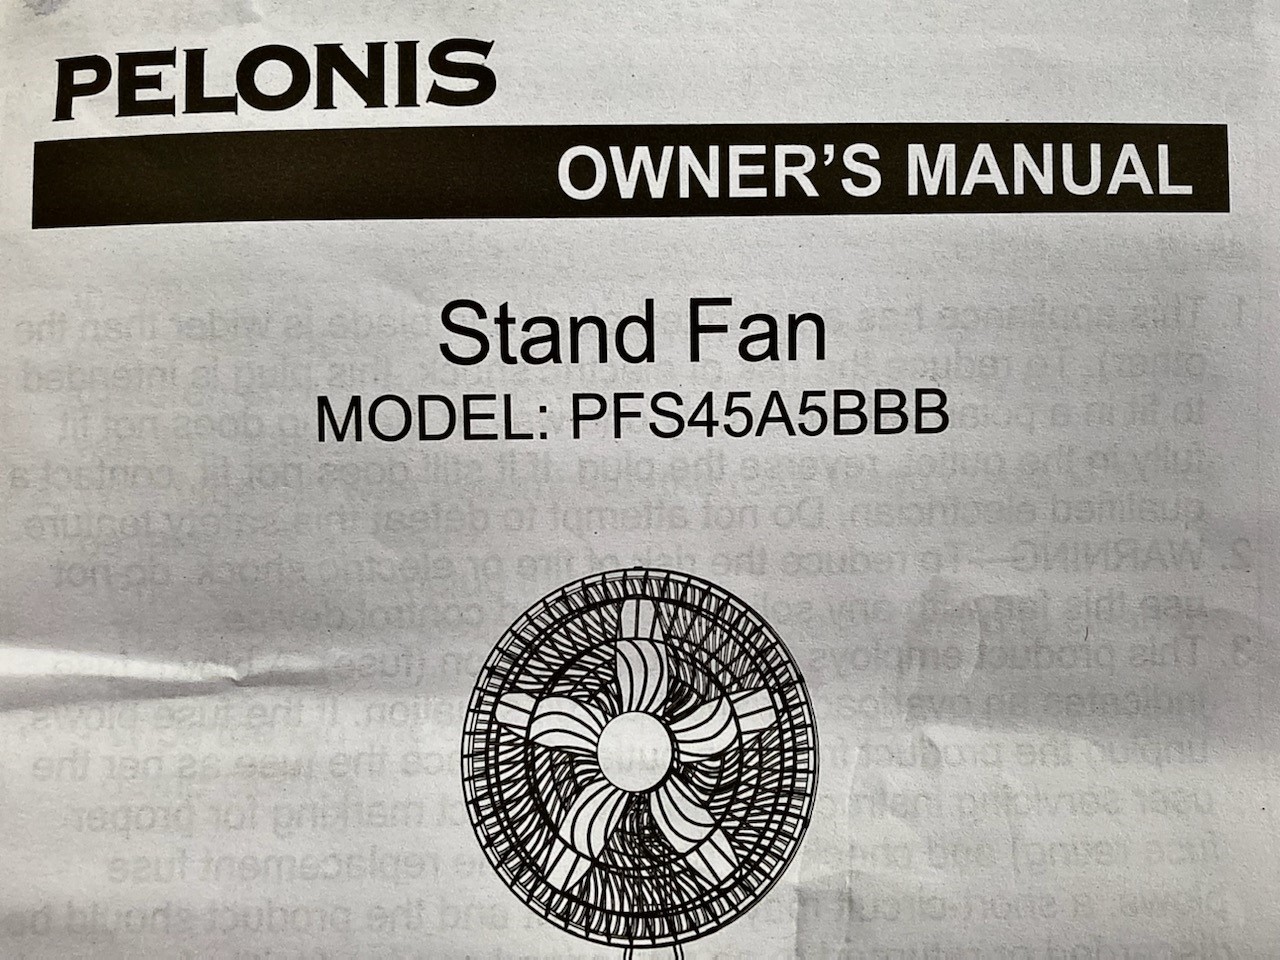 Pelonis manual and number.jpg